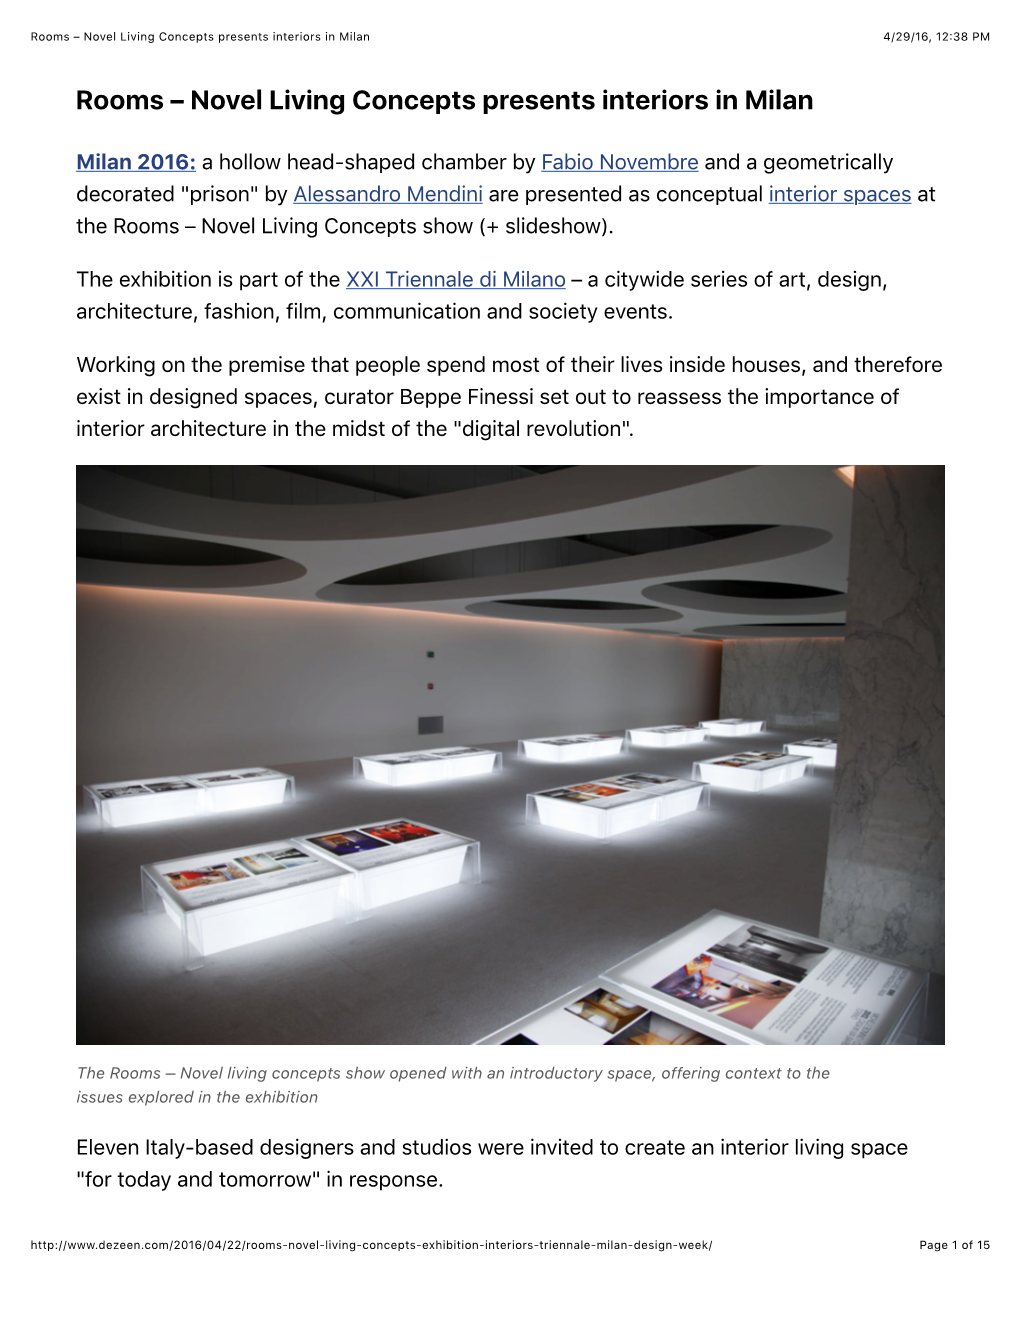 Rooms – Novel Living Concepts Presents Interiors in Milan 4/29/16, 12:38 PM